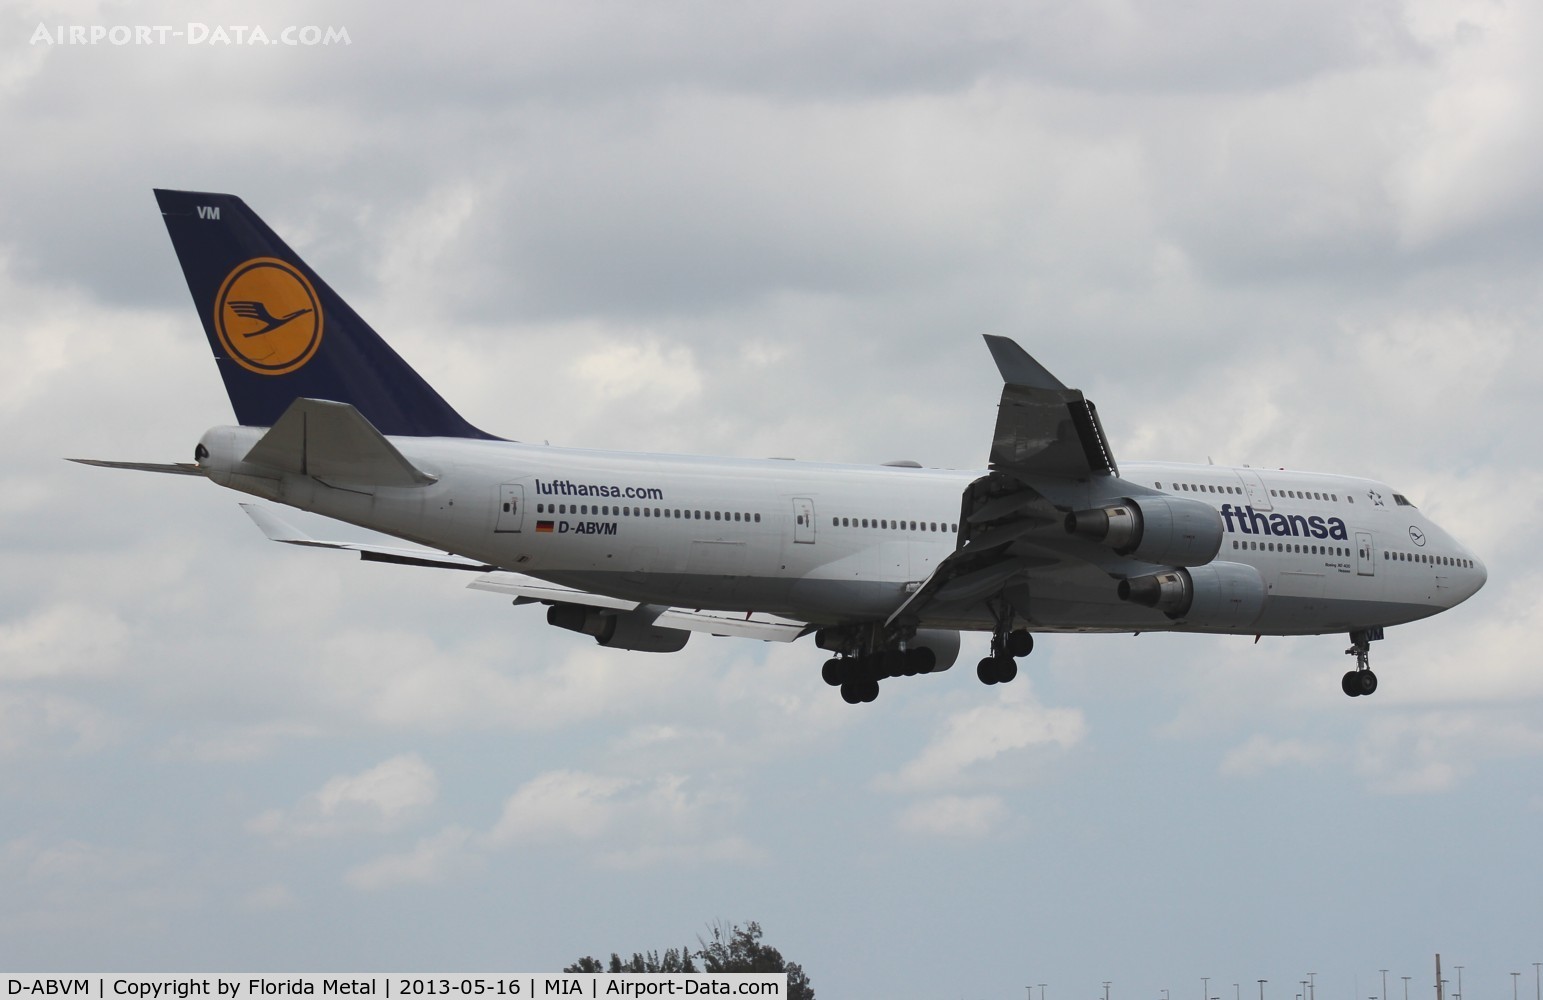 D-ABVM, 1998 Boeing 747-430 C/N 29101, Lufthansa 747-400